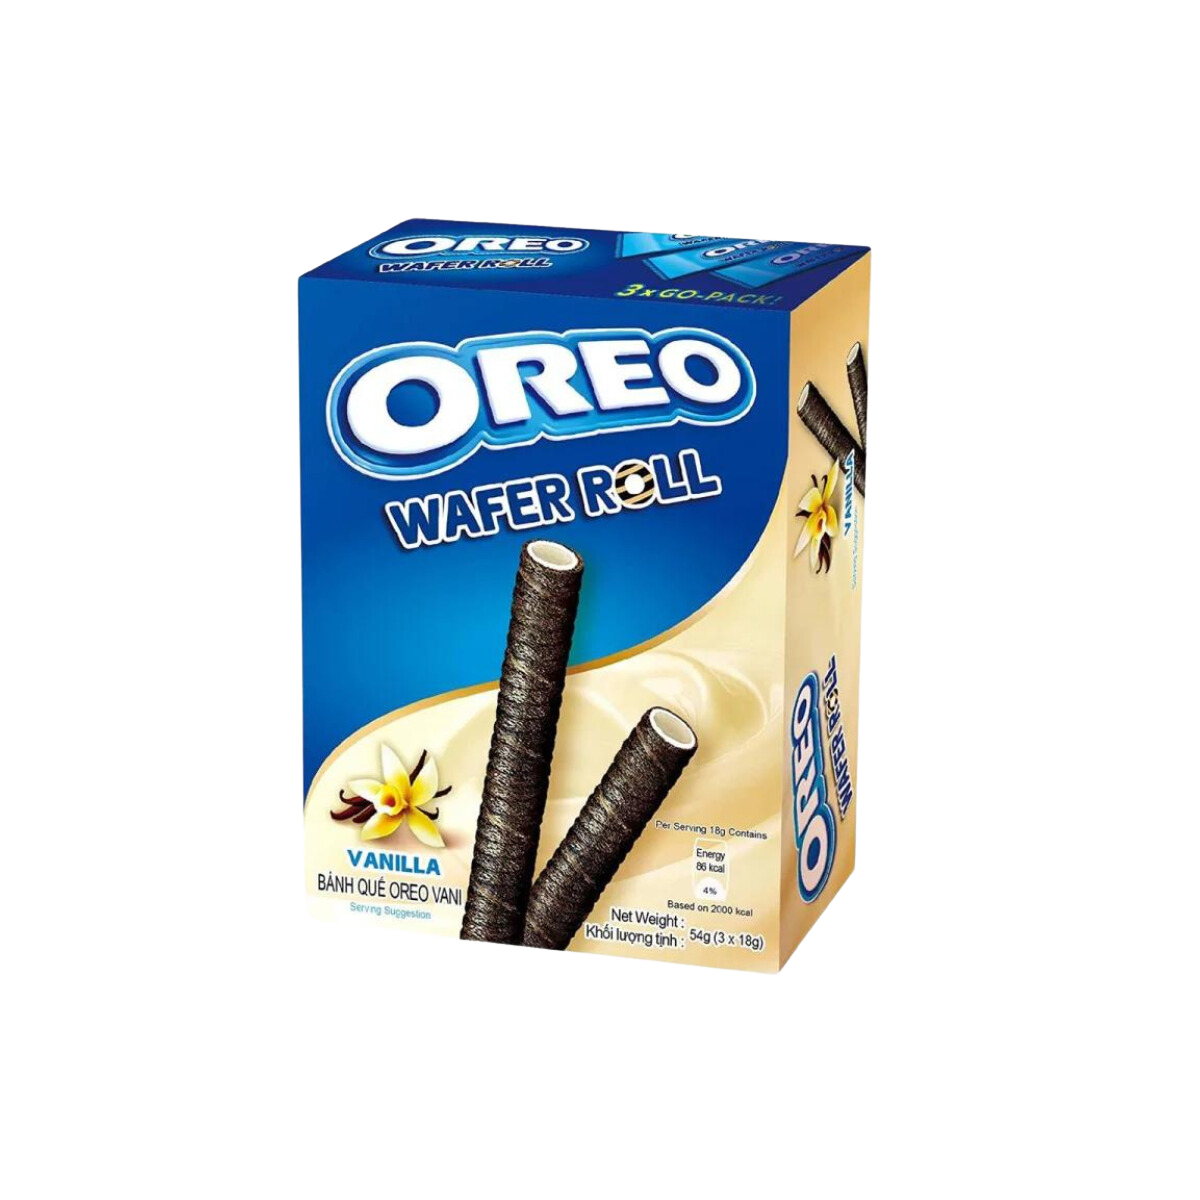 Oreo Wafer roll vanilla